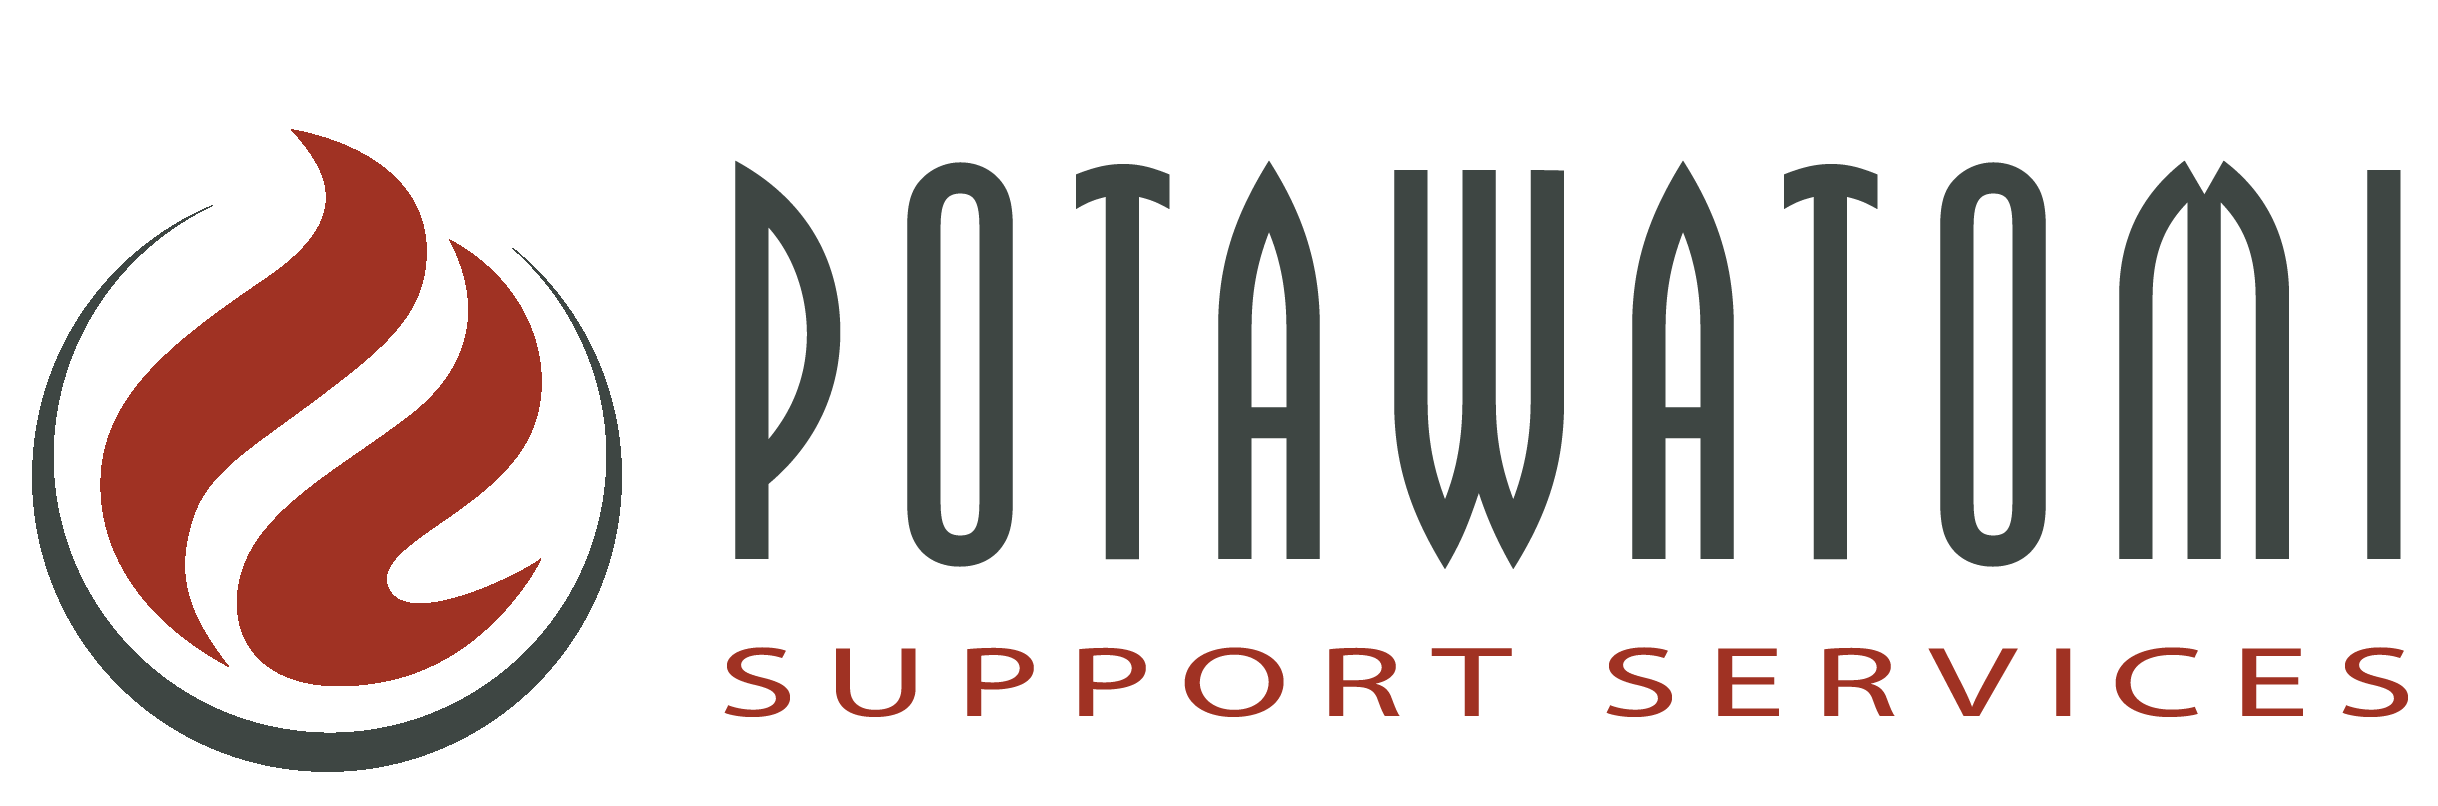 *Potawatomi Support Services